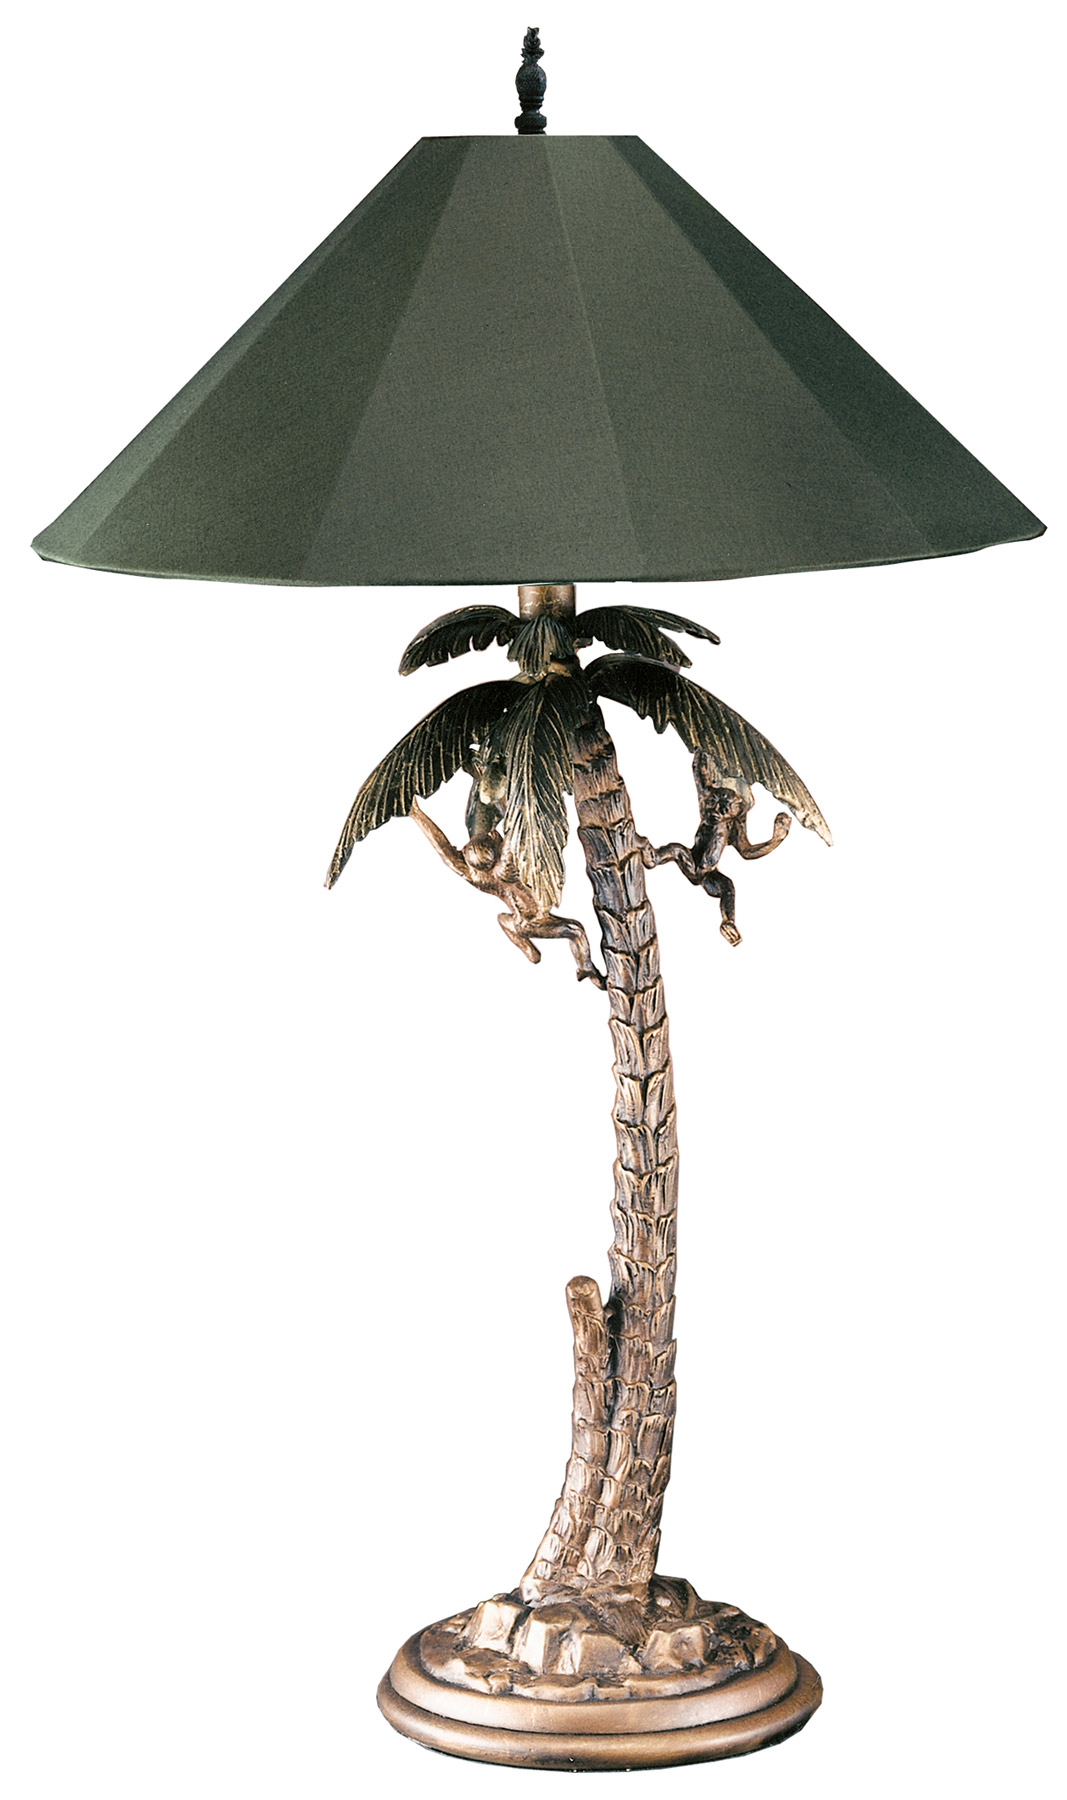 Three Reasons to Buy a Tree Floor Lamp